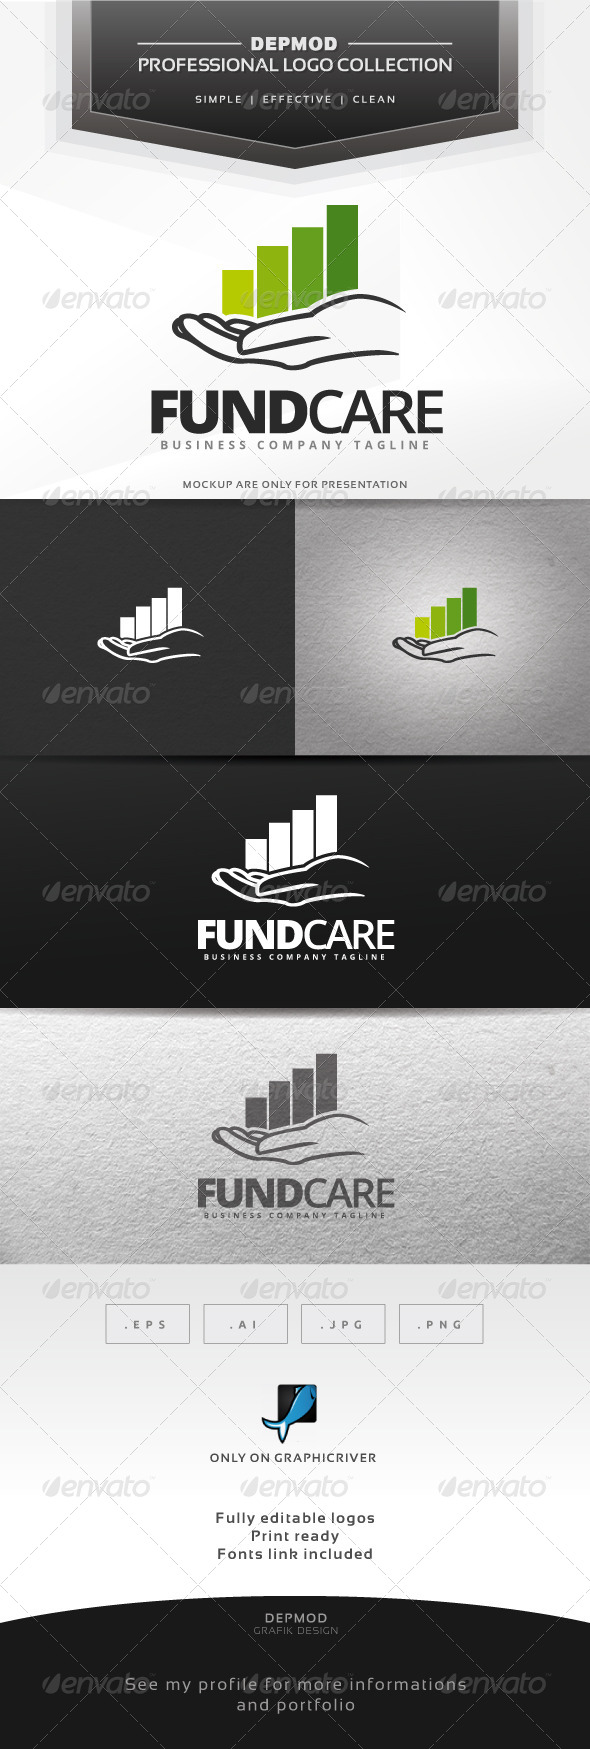 Fund Care Logo